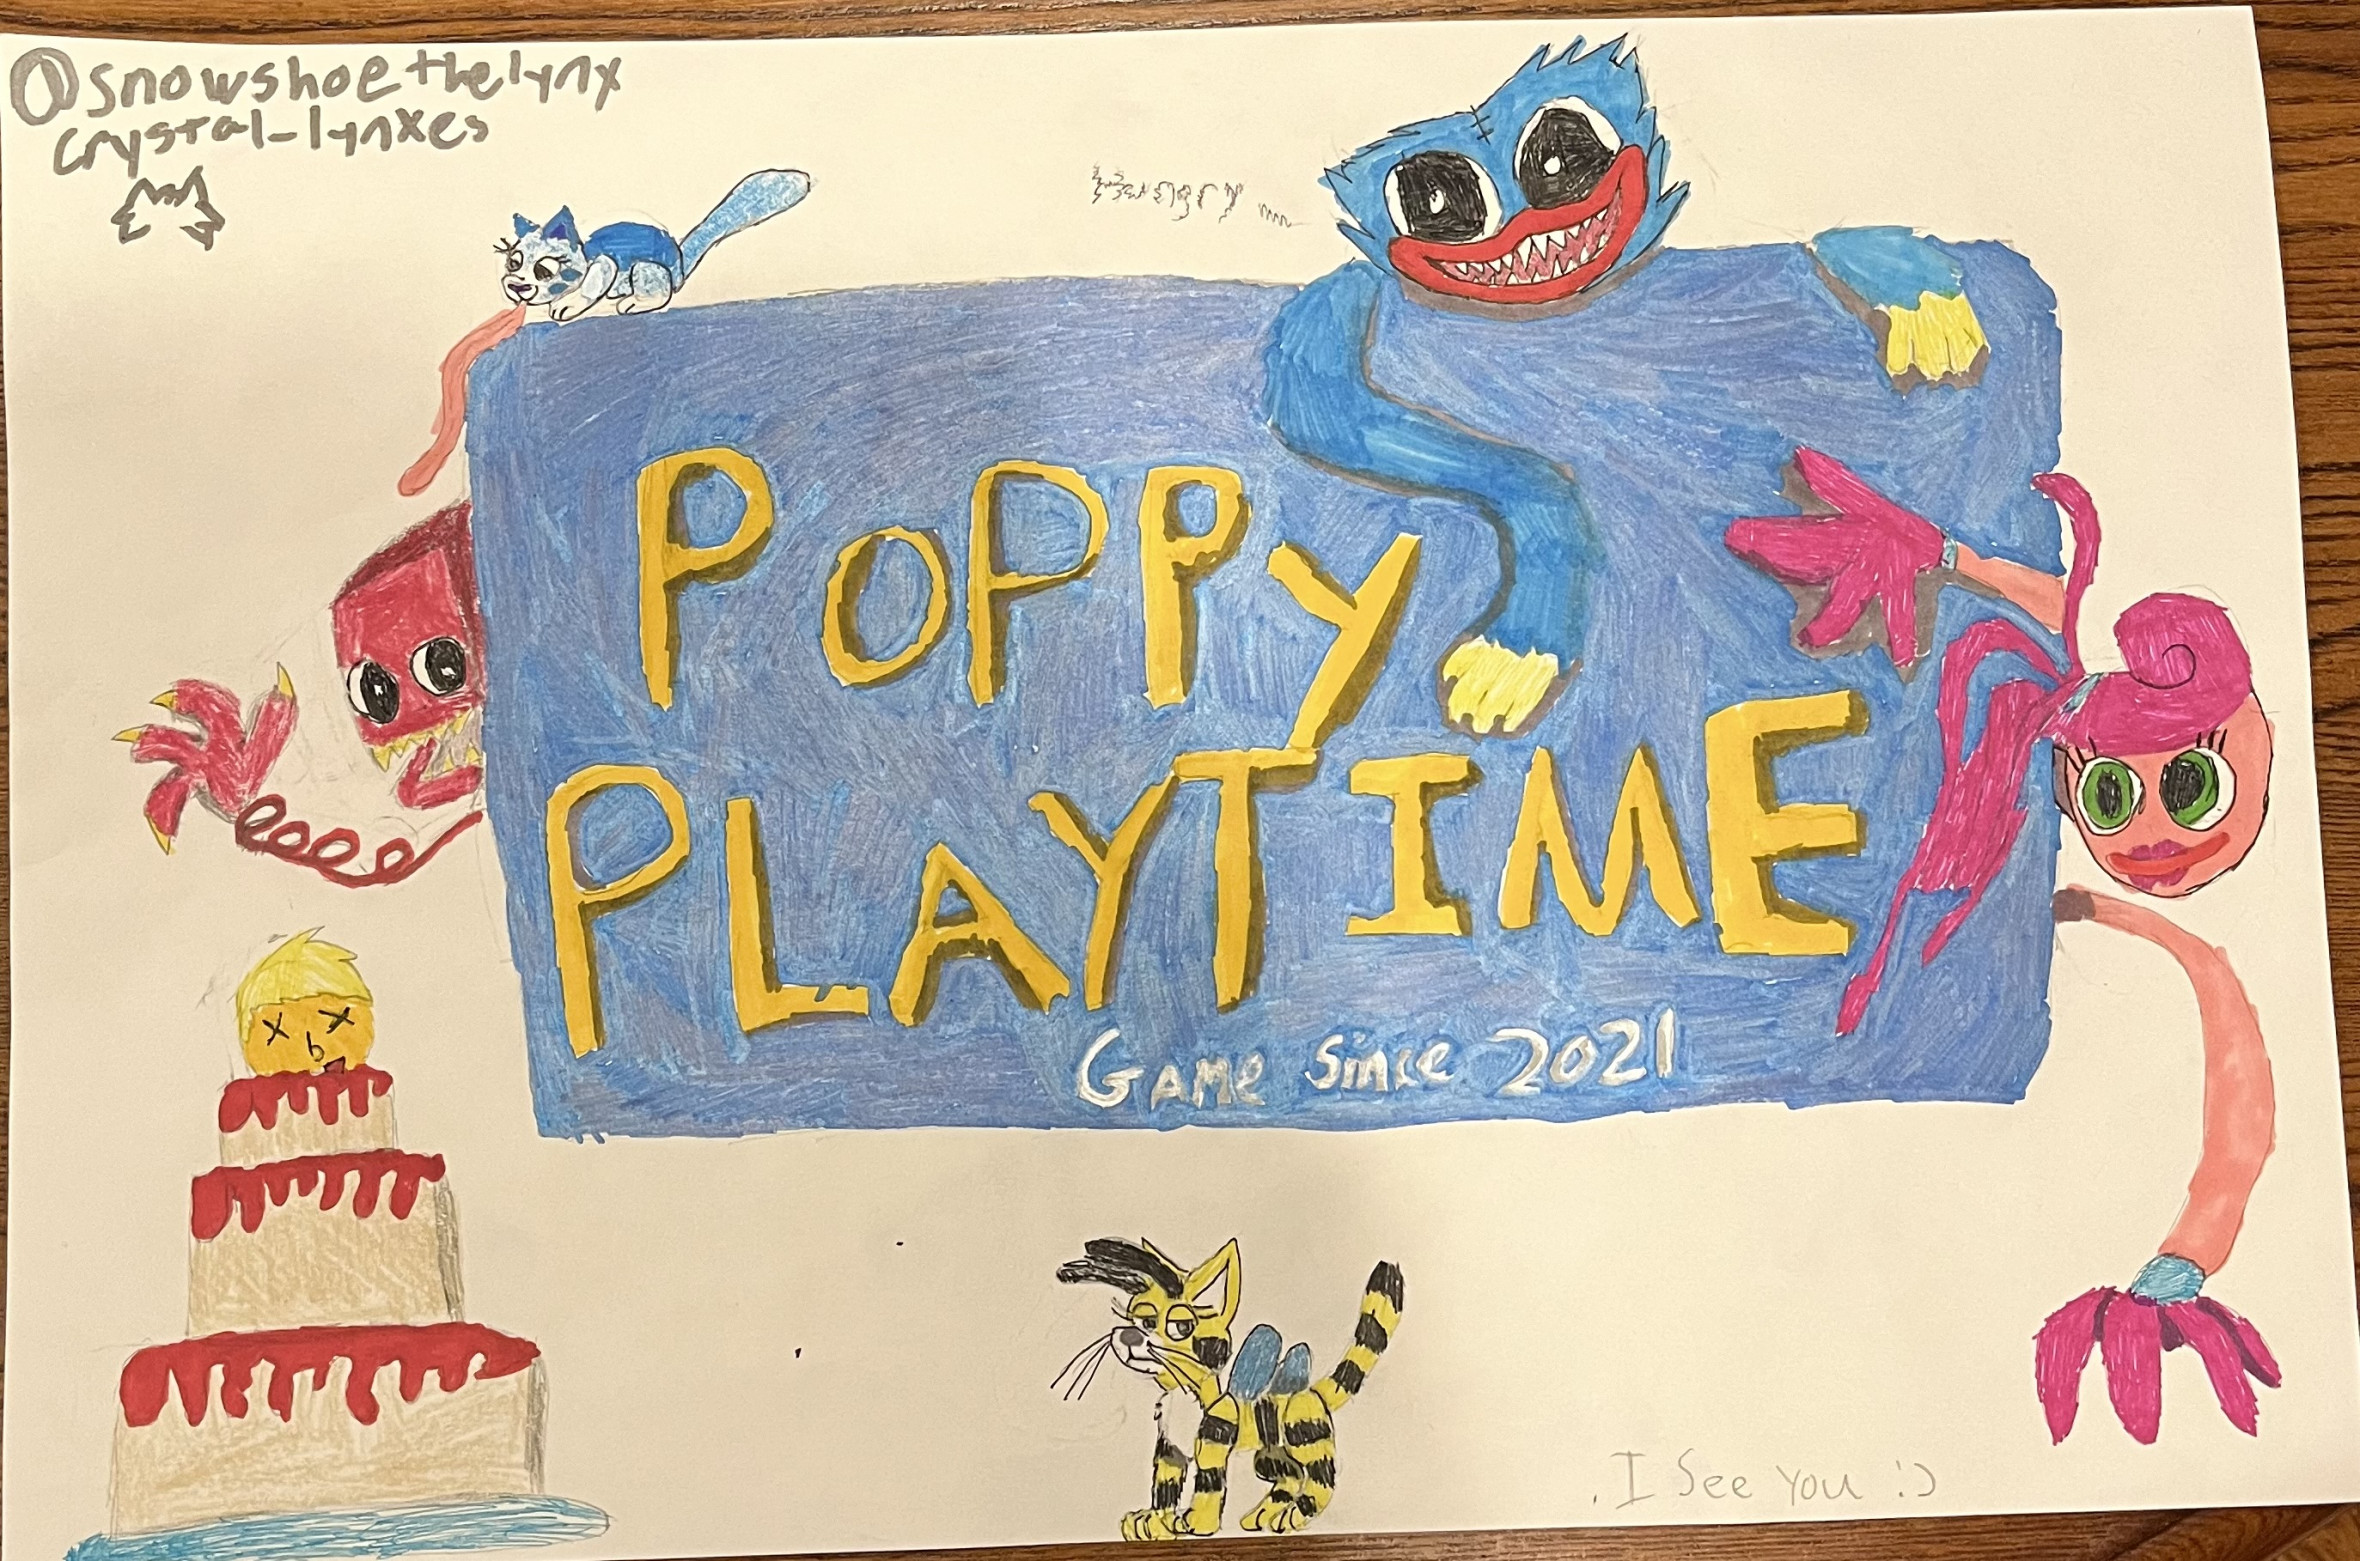 Happy 1 yeah anaversary too Poppy Playtime chapter 2! (Sorry if i  misspelled) : r/PoppyPlaytime